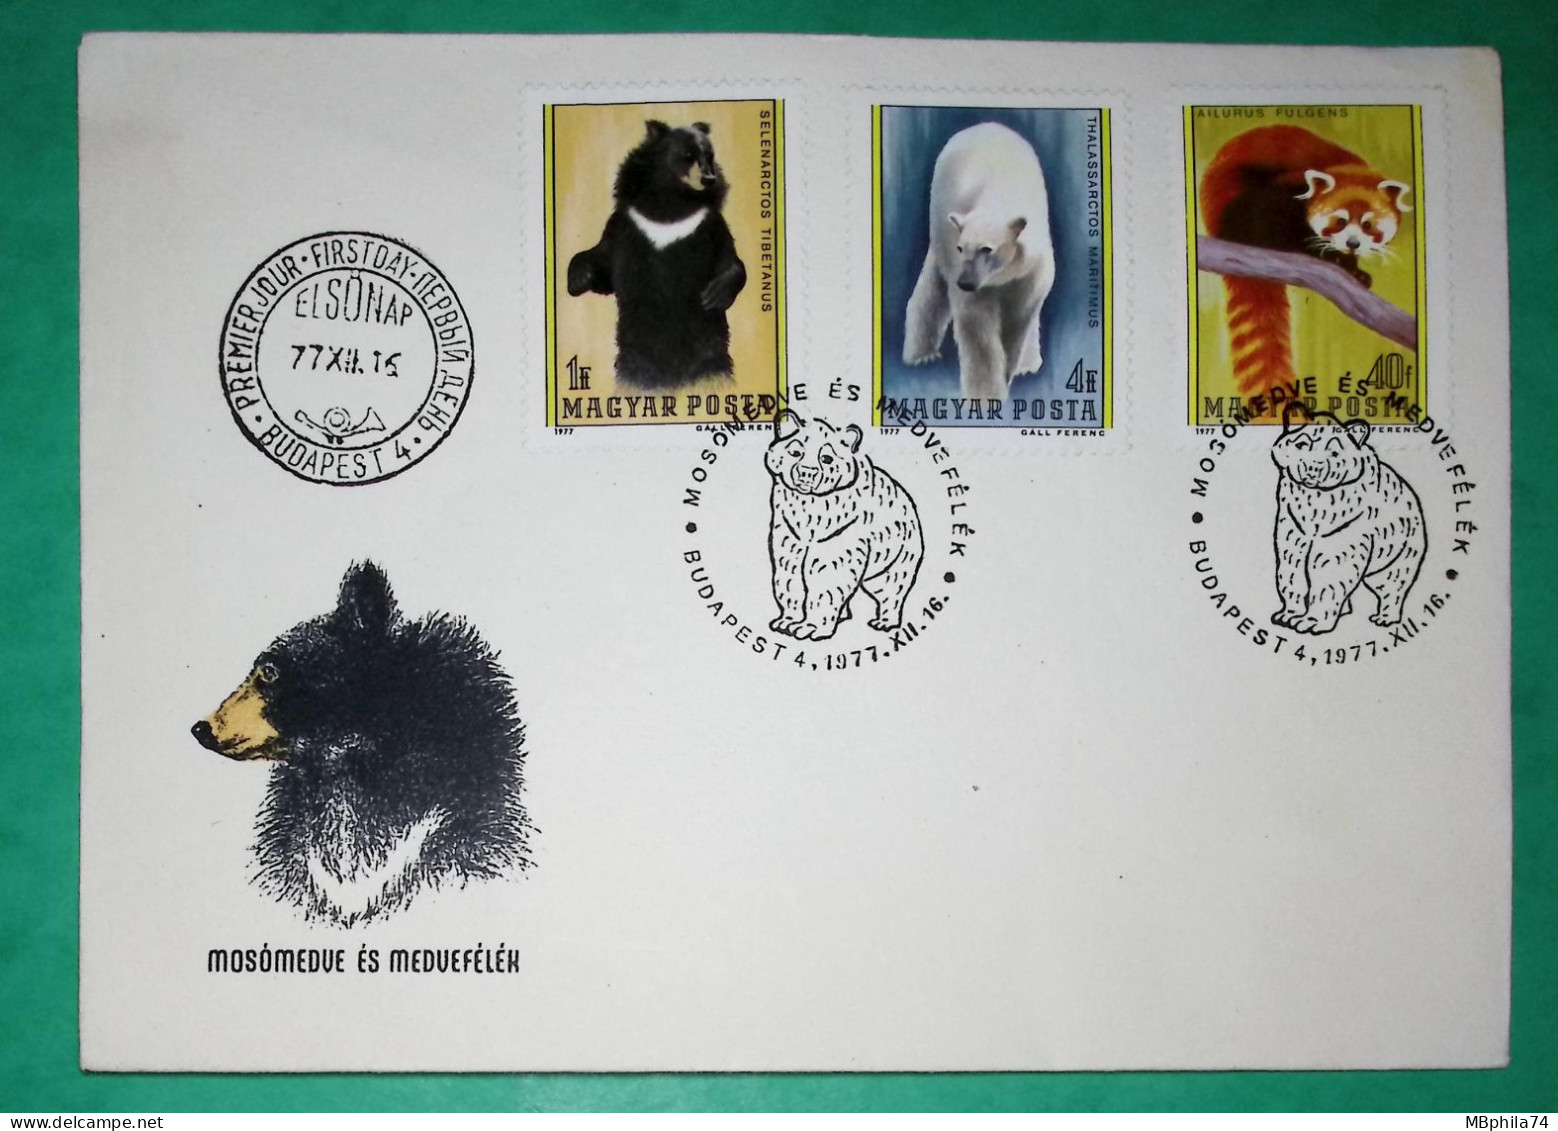 FIRST DAY COVER BUDAPEST MOSOMEDVE ES MEDVEFELEK STAMPS ANIMALS WHITE BLACK BEAR RED PANDA 1977 REGISTERED LETTER - Briefe U. Dokumente